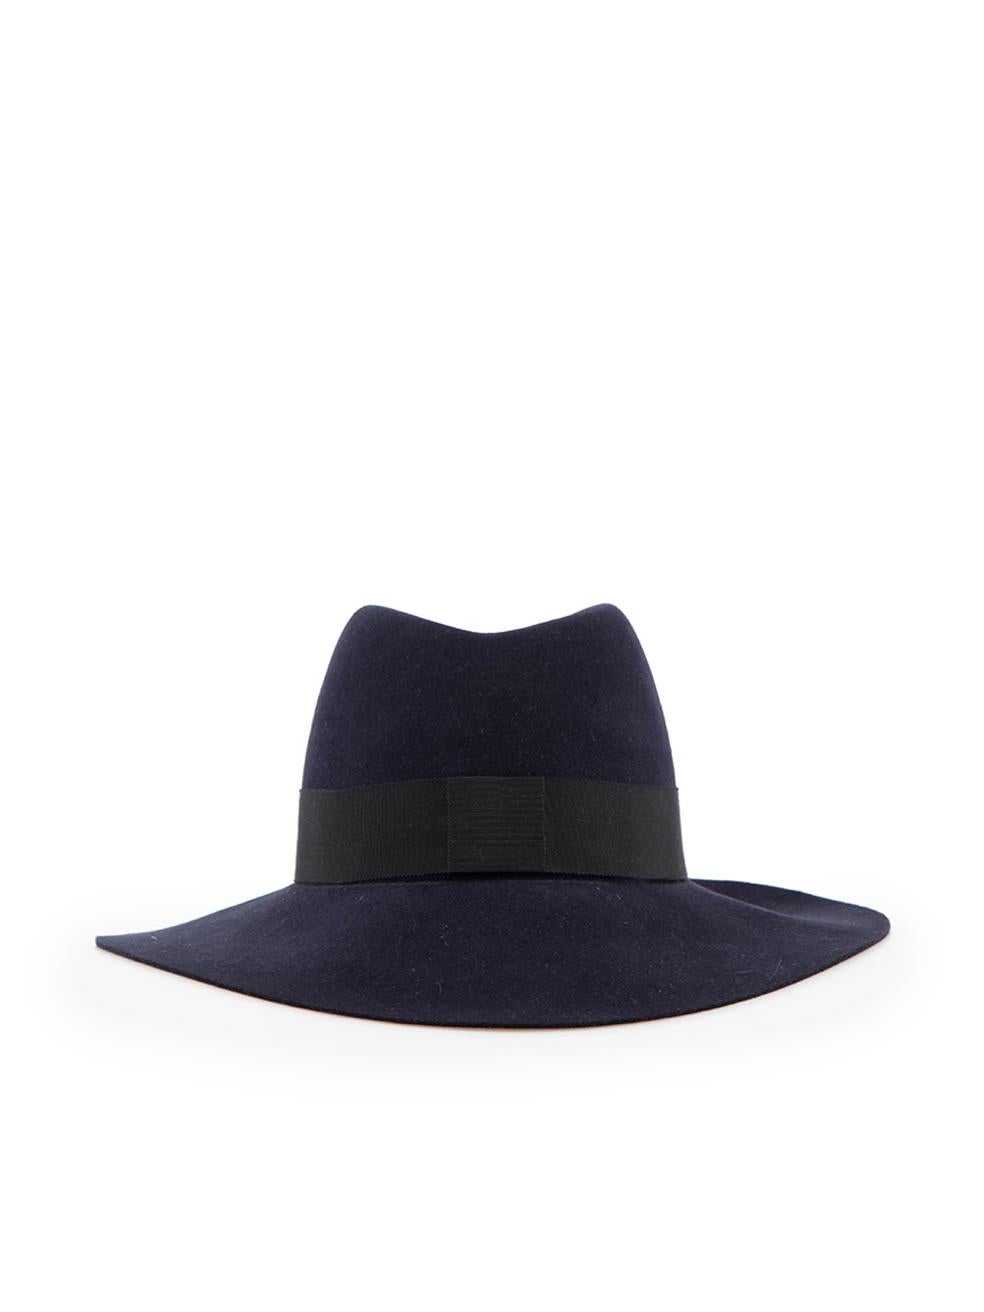 Maison Michel Navy Felt Fedora Hat In Excellent Condition In London, GB